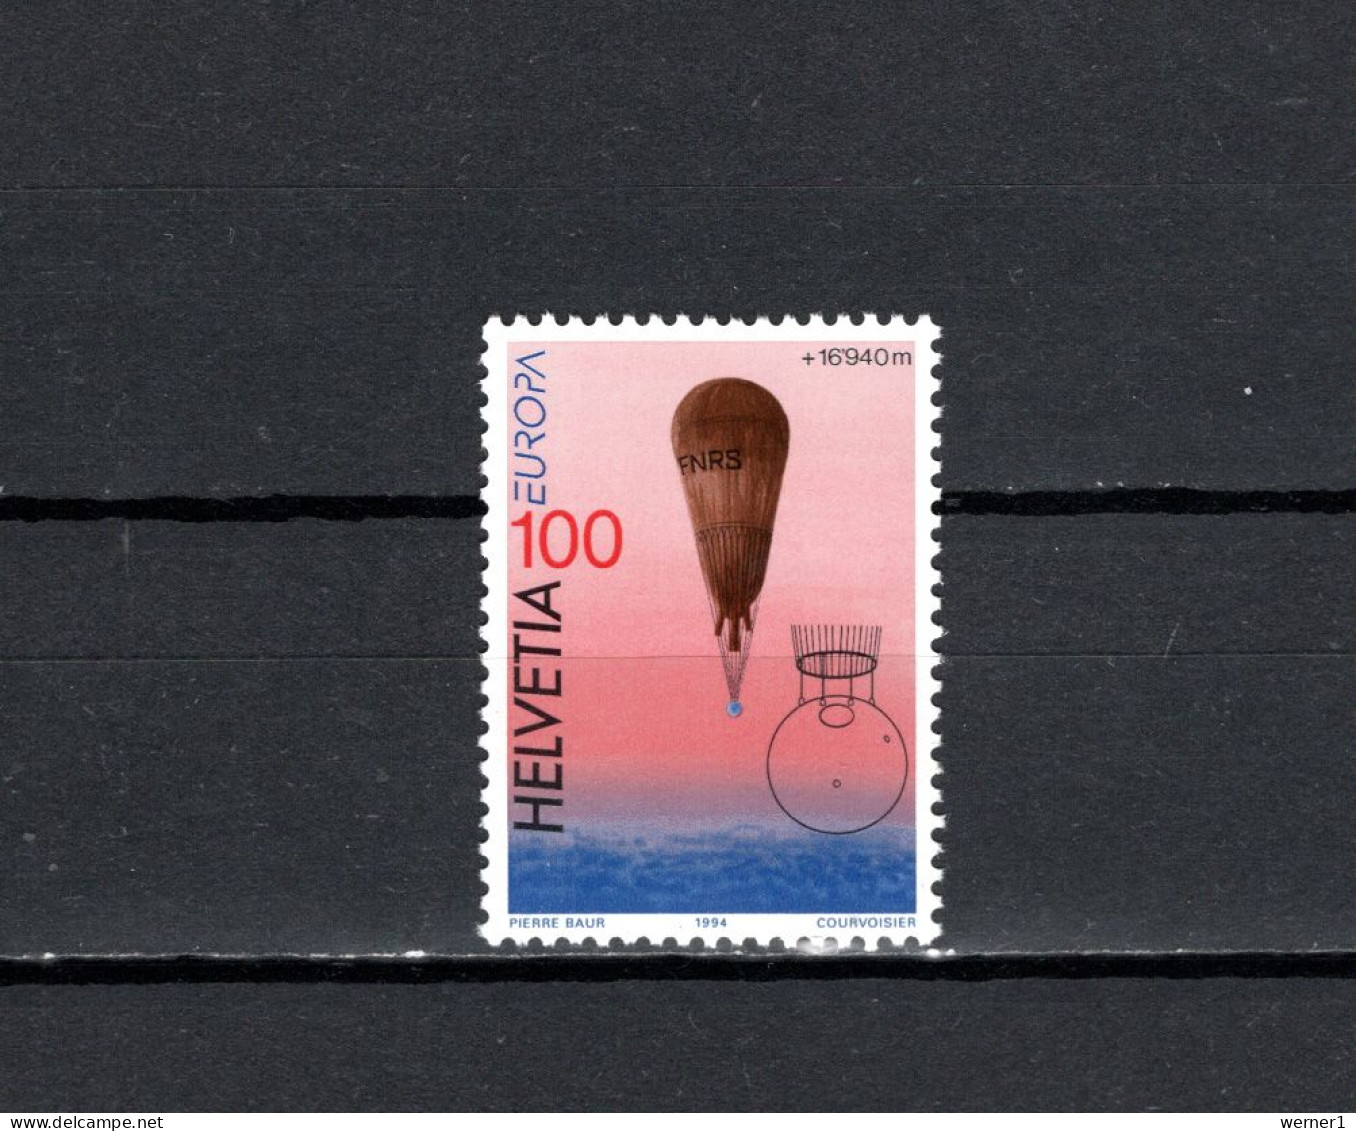 Switzerland 1994 Space, FNRS Stratosphere Balloon Stamp MNH - Europe